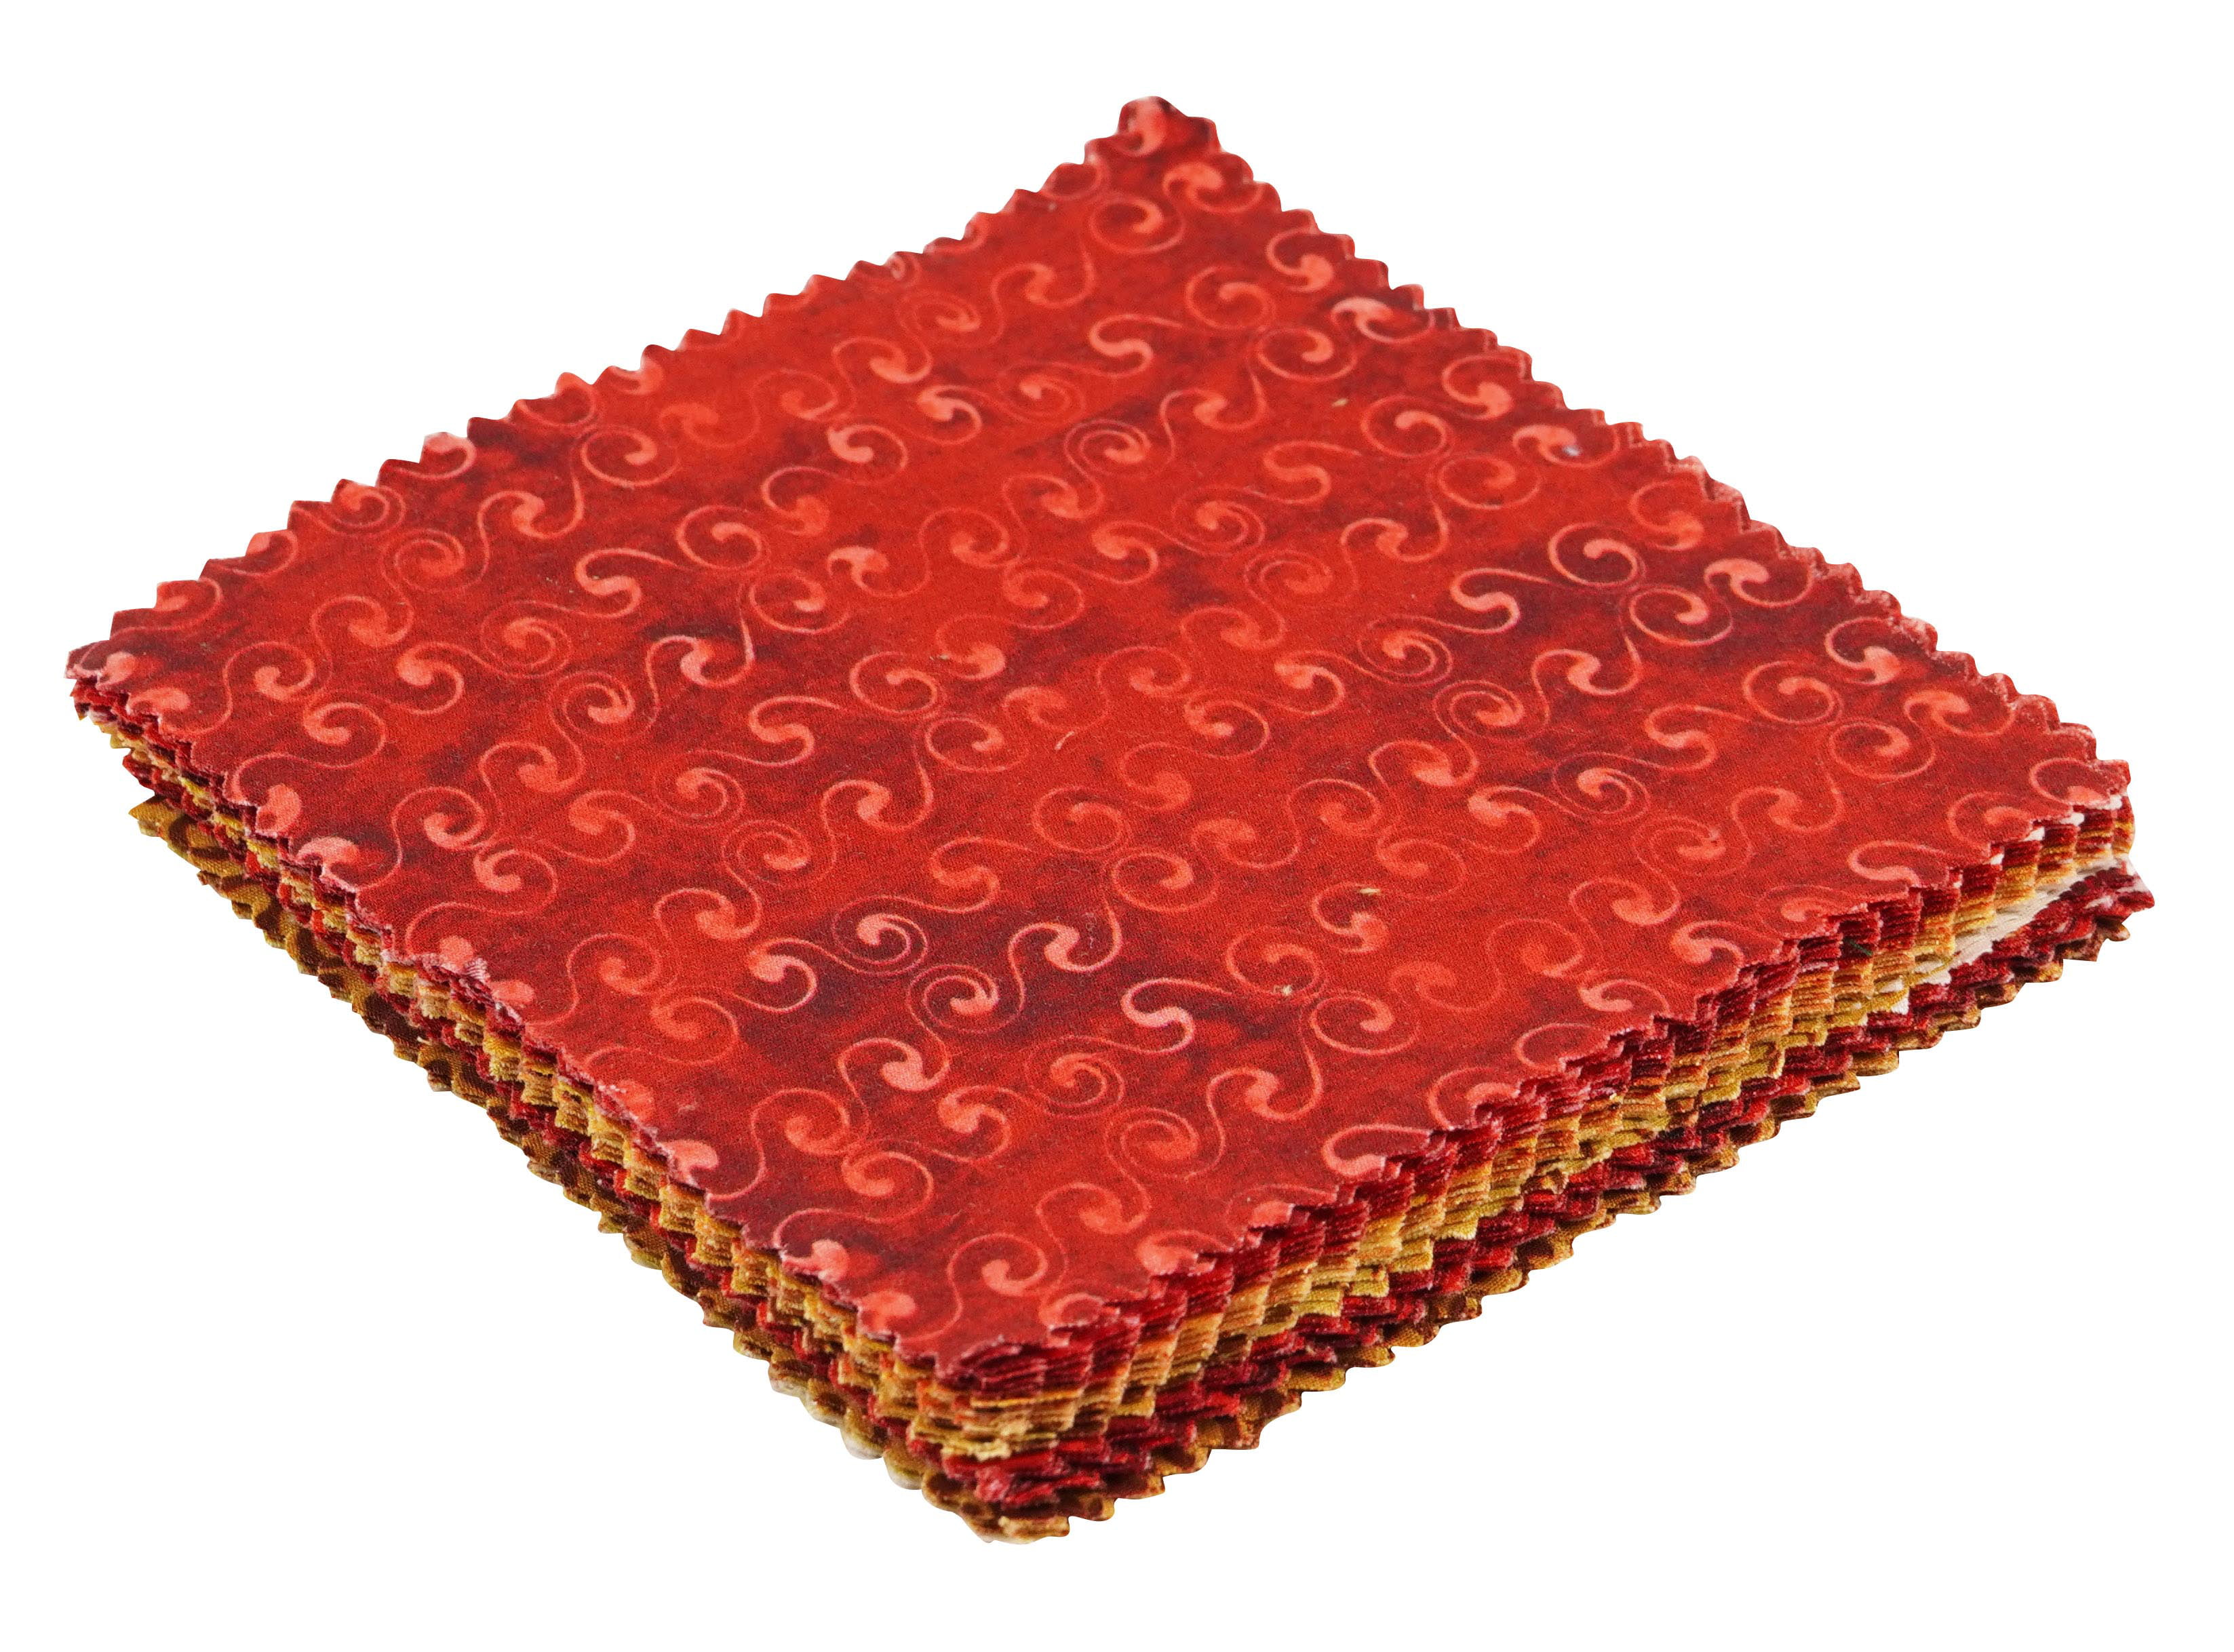 Soimoi Batik Print Precut 10-inch Cotton Fabric Quilting Squares